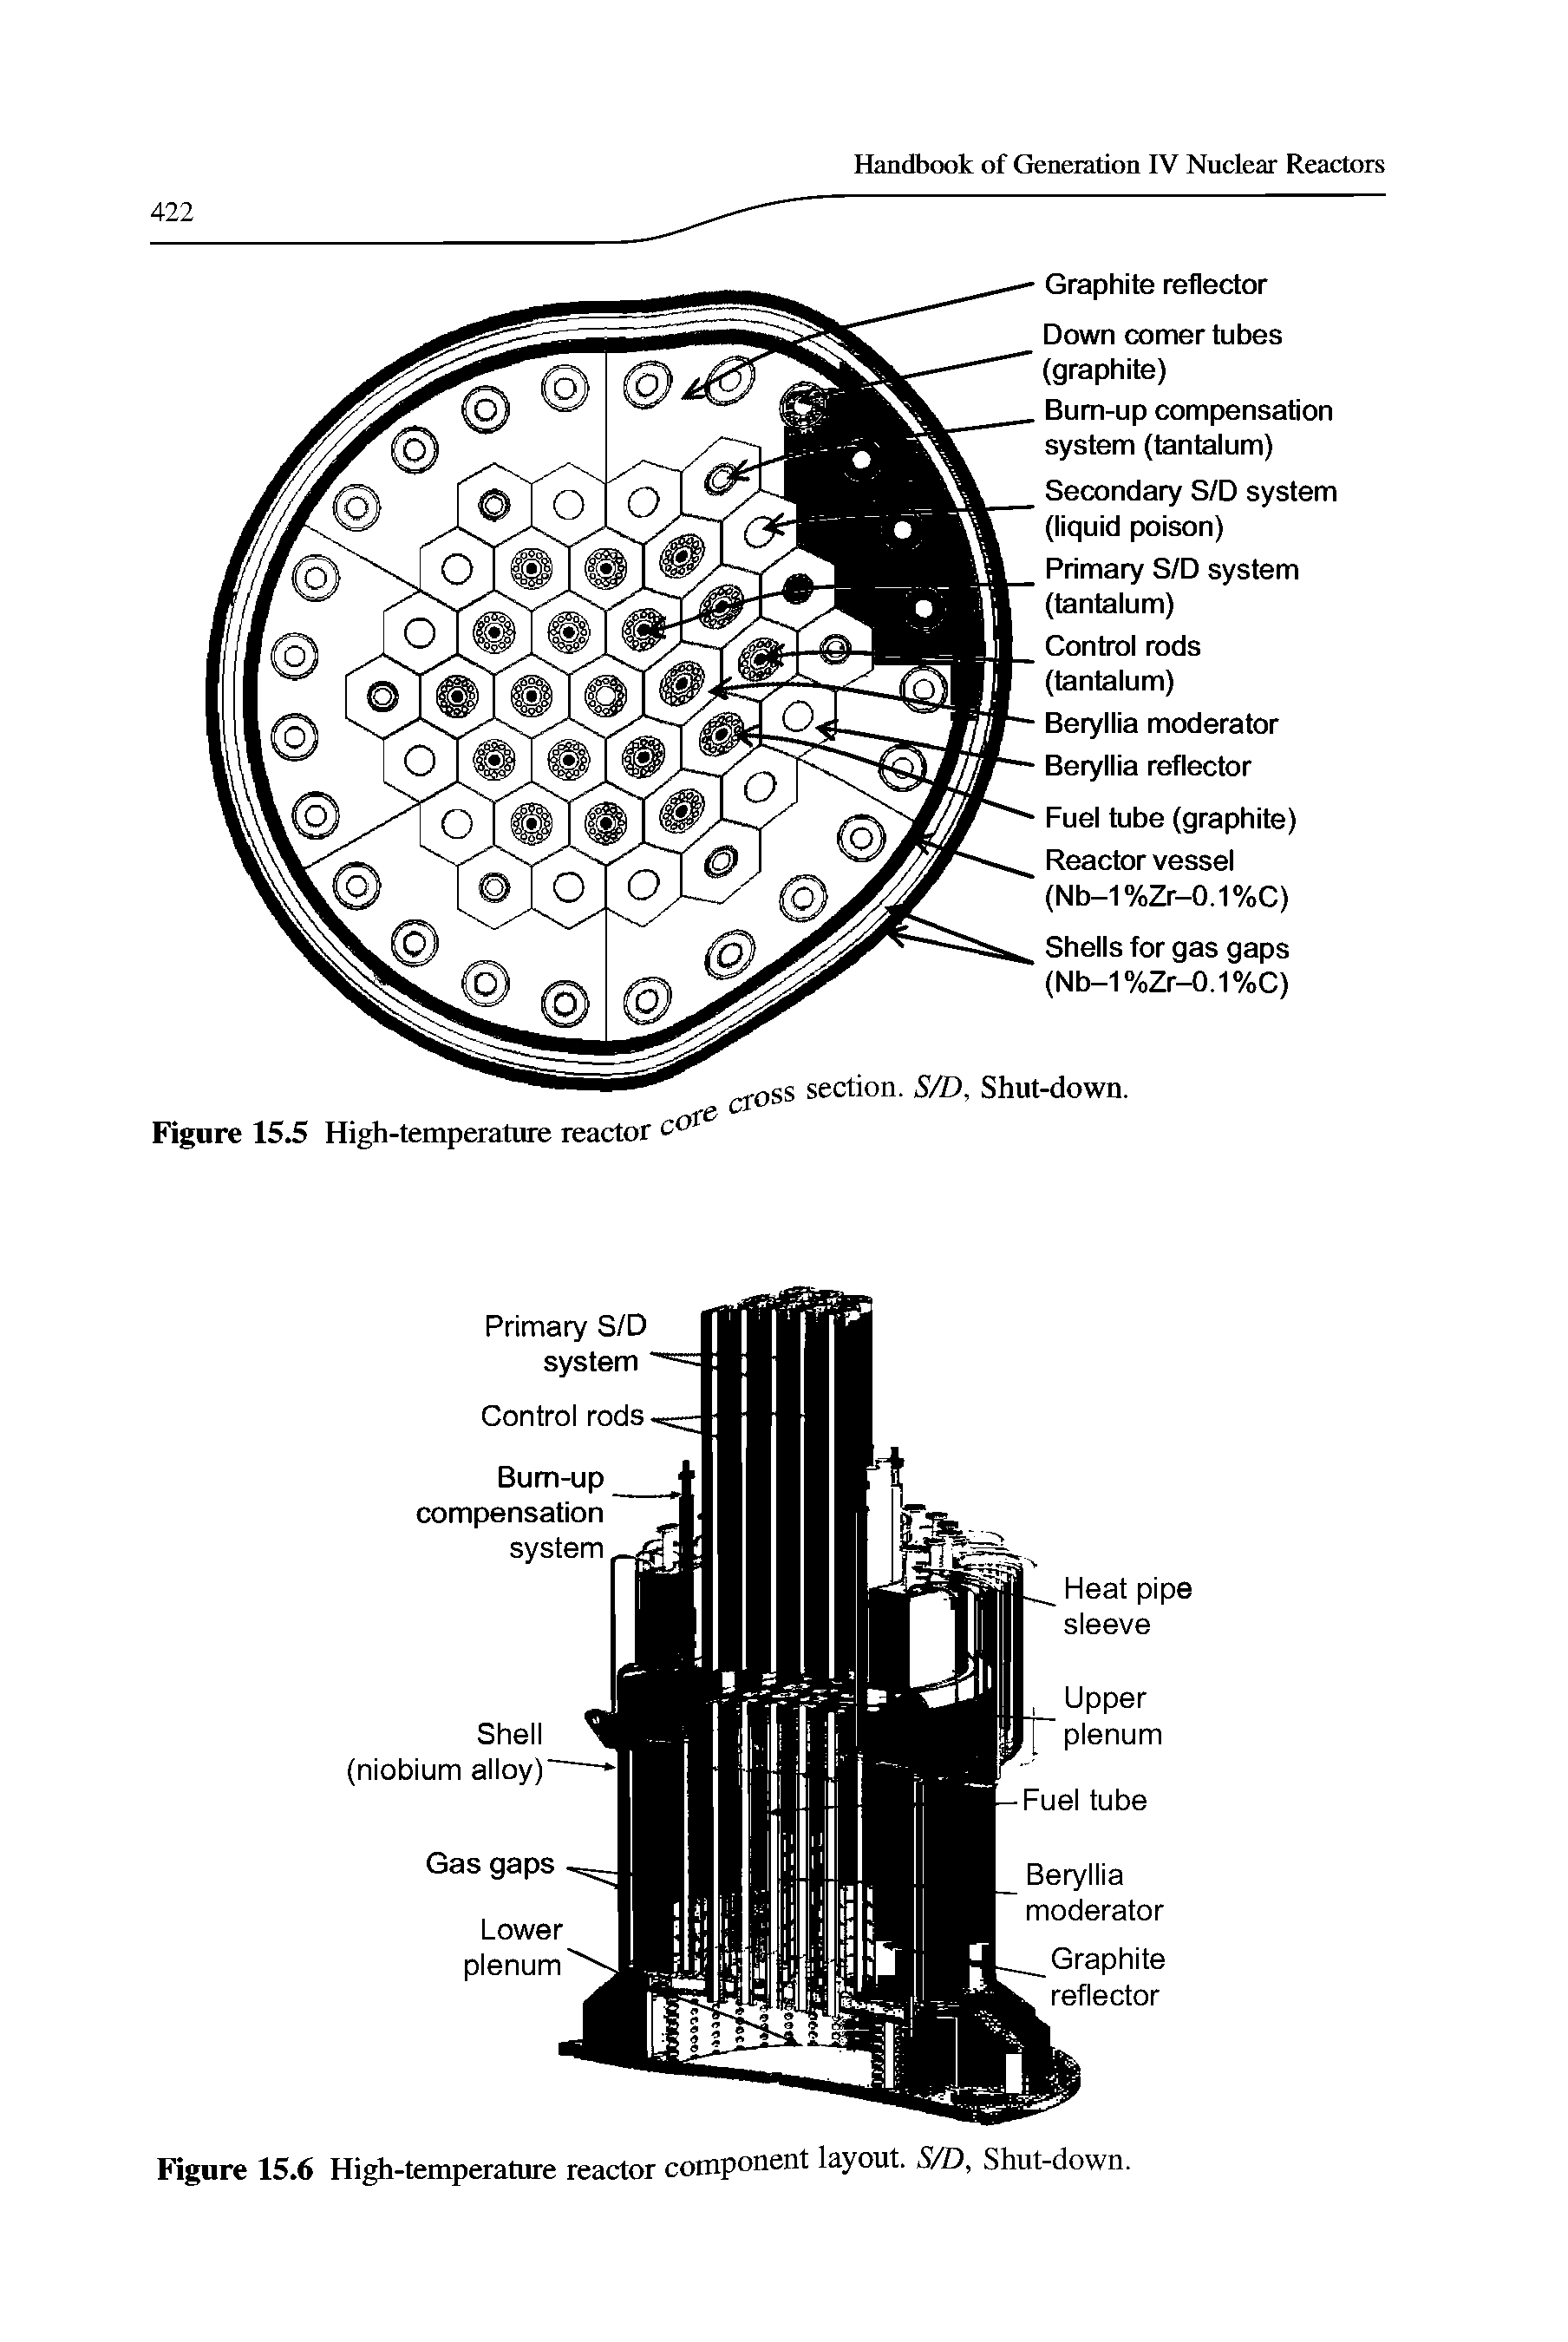 Figure 15.5 High-temperature reactor core cross section. S/D, Shut-down.